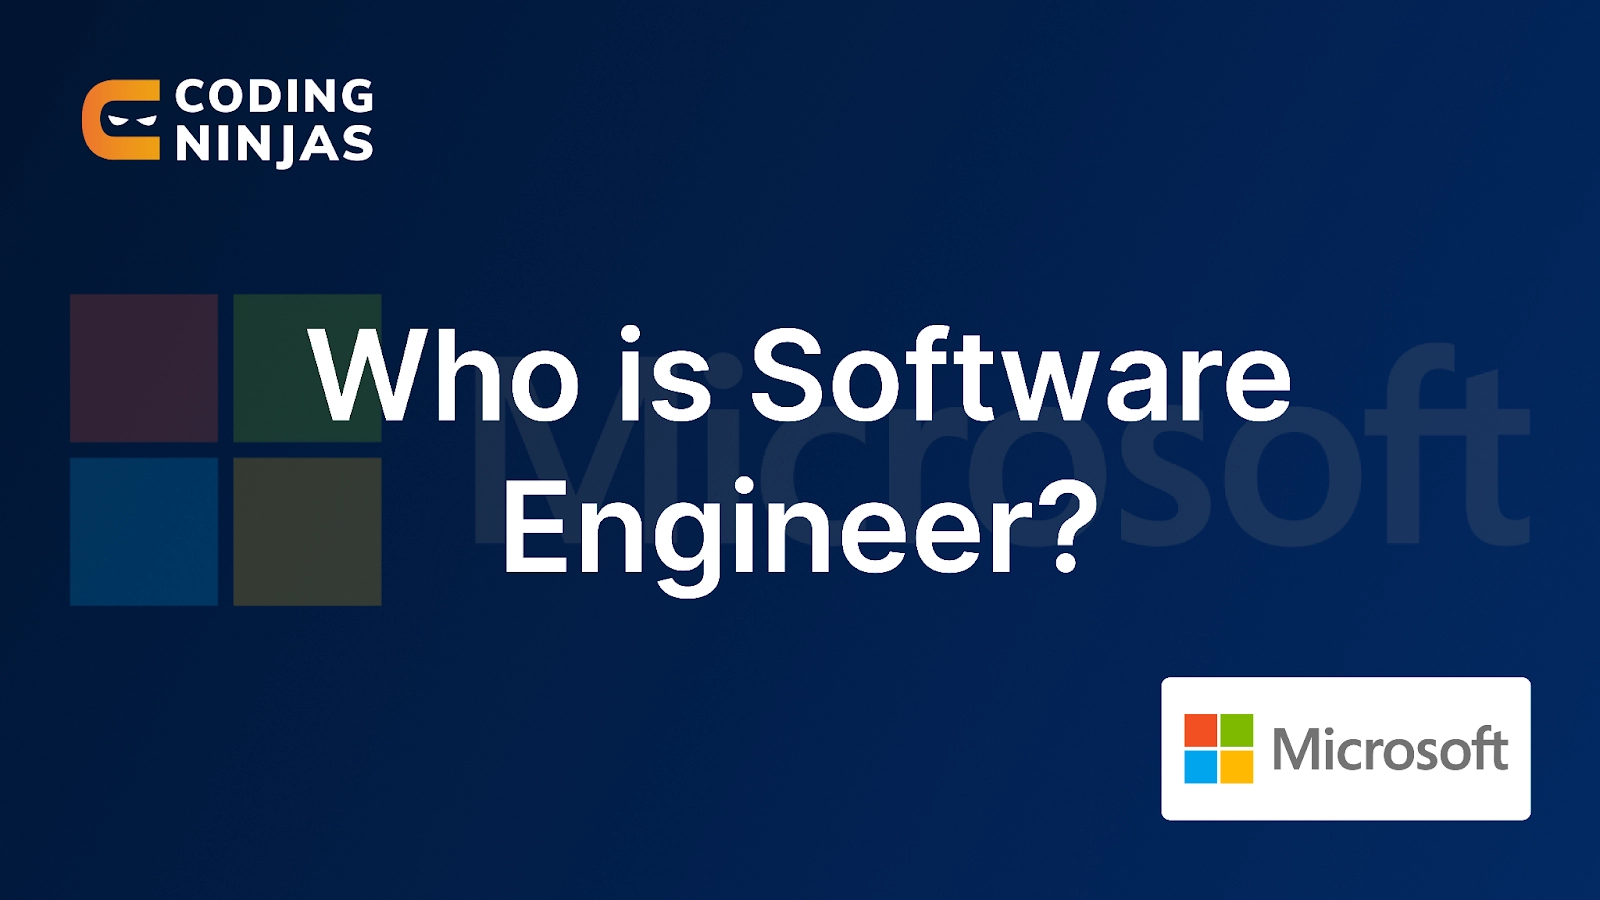 Software Engineer at Microsoft - Coding Ninjas